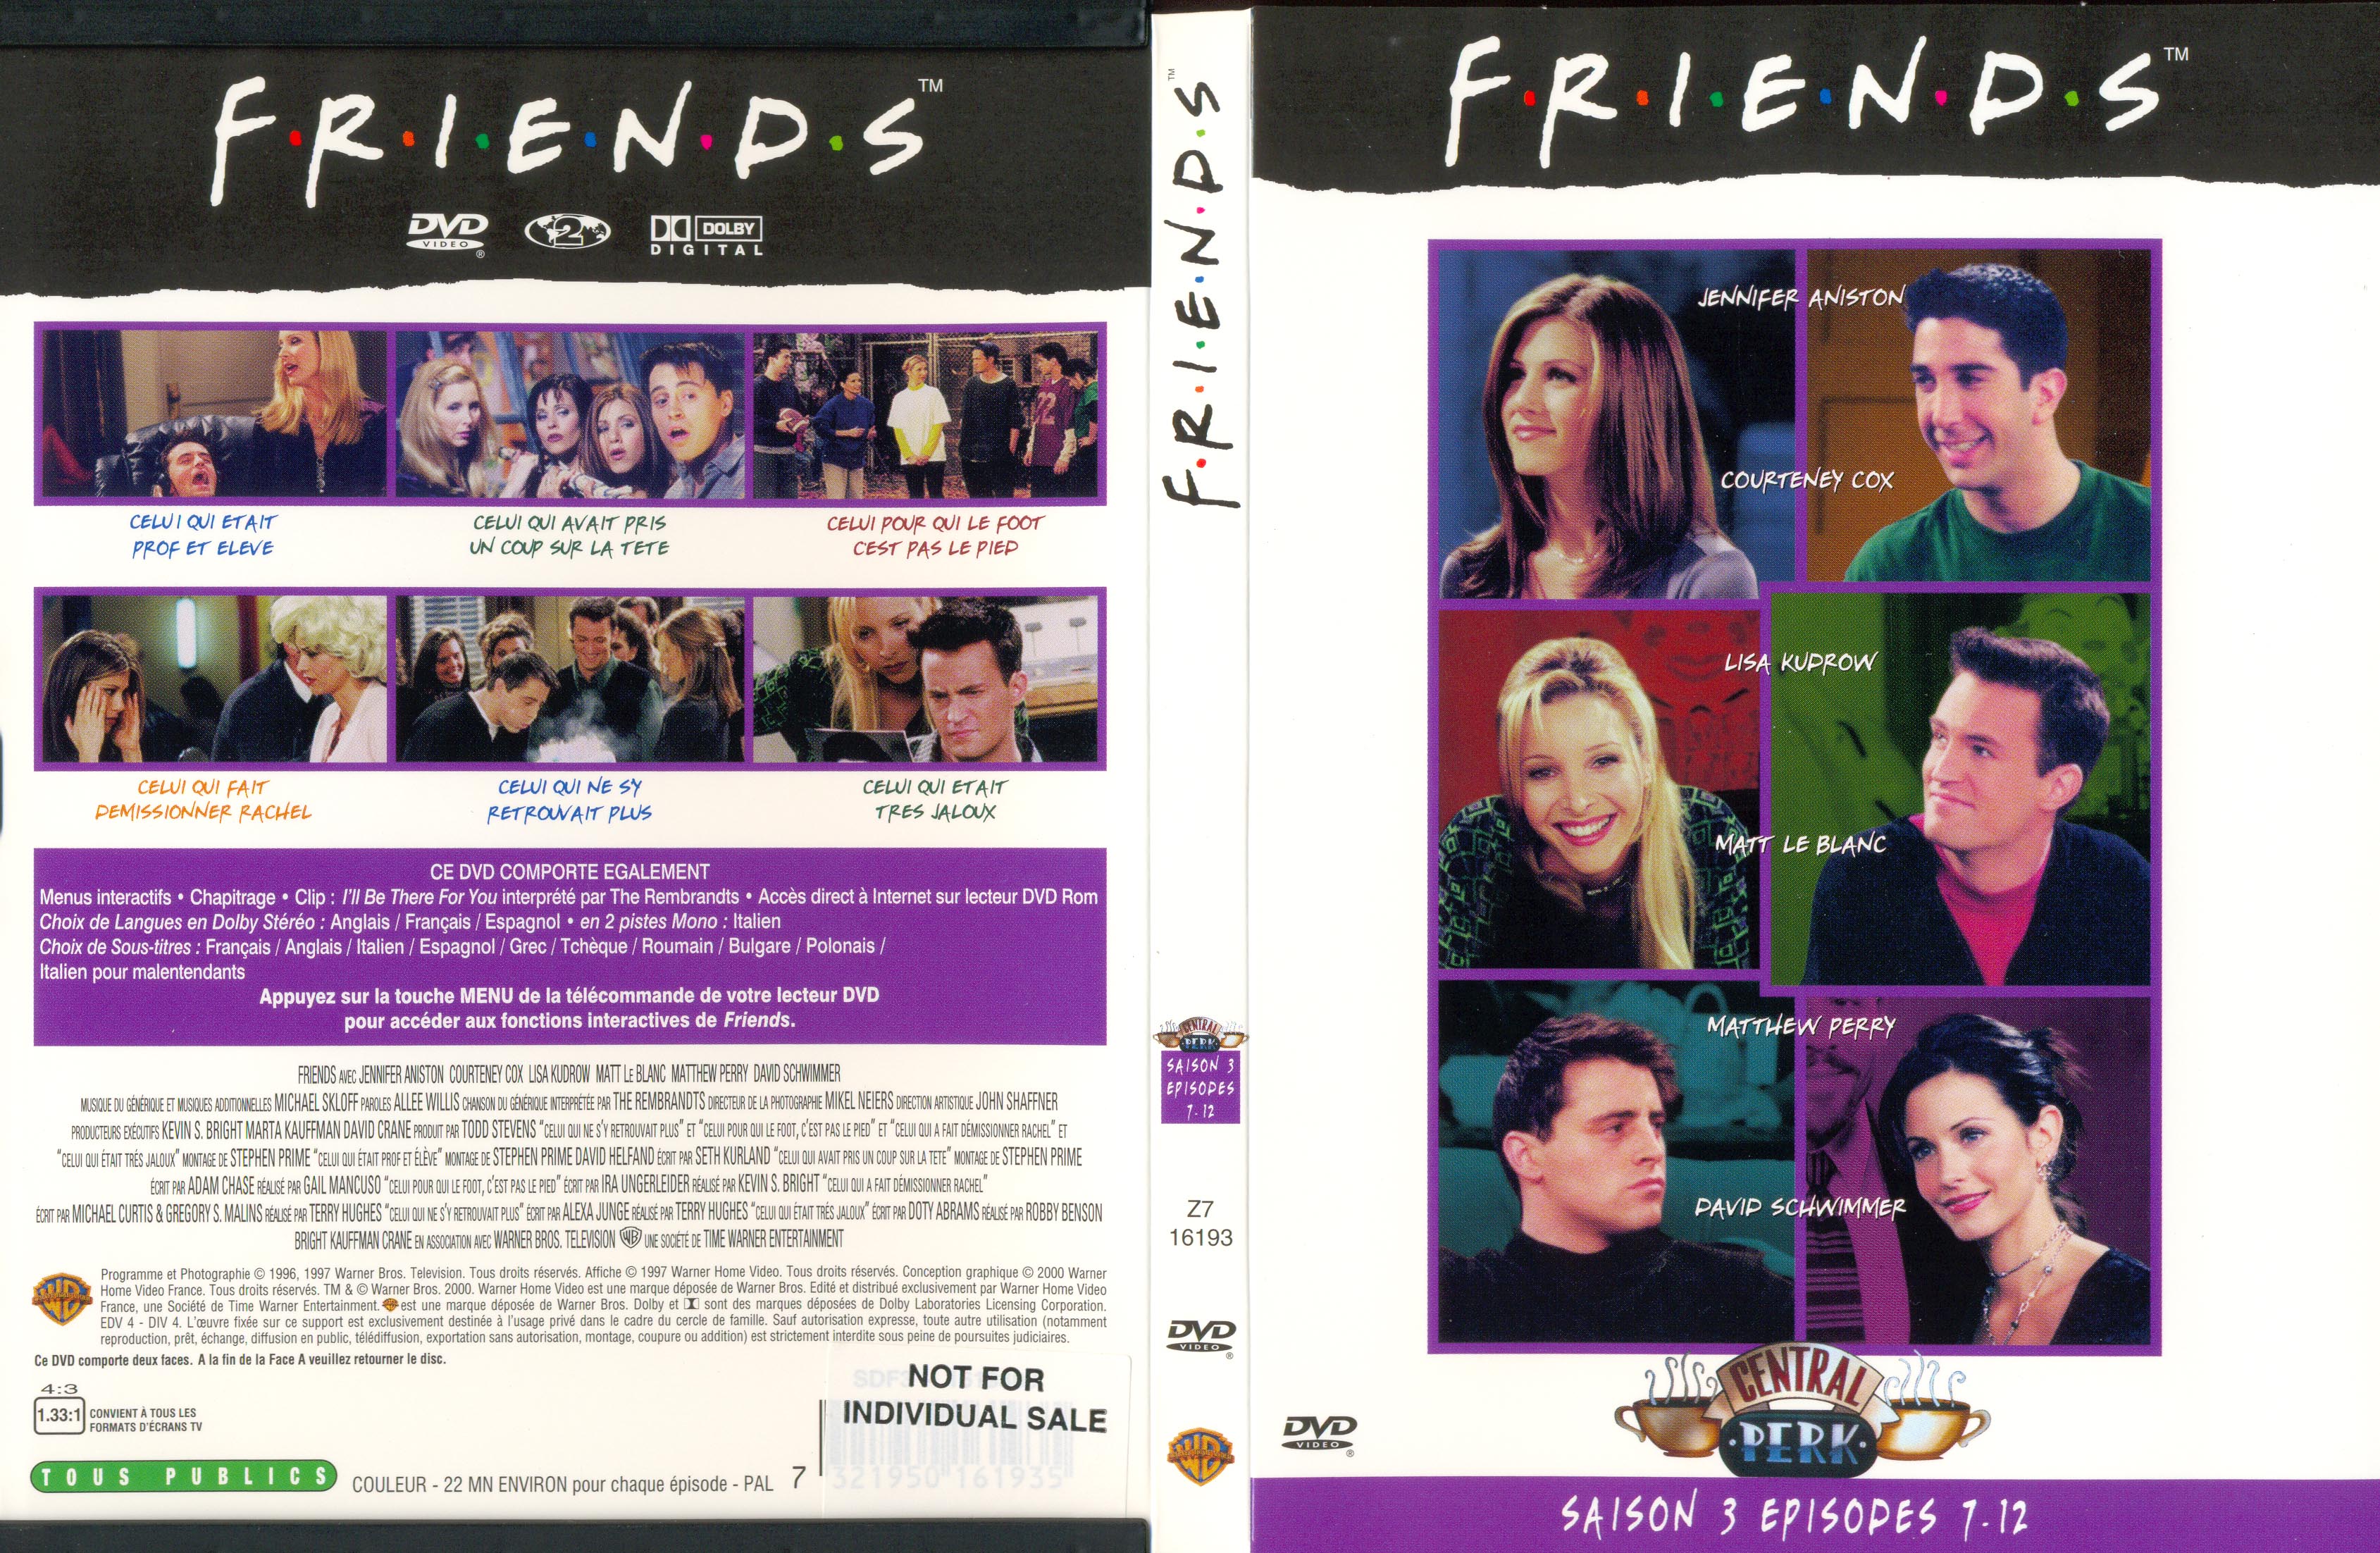 Jaquette DVD Friends saison 3 dvd 2